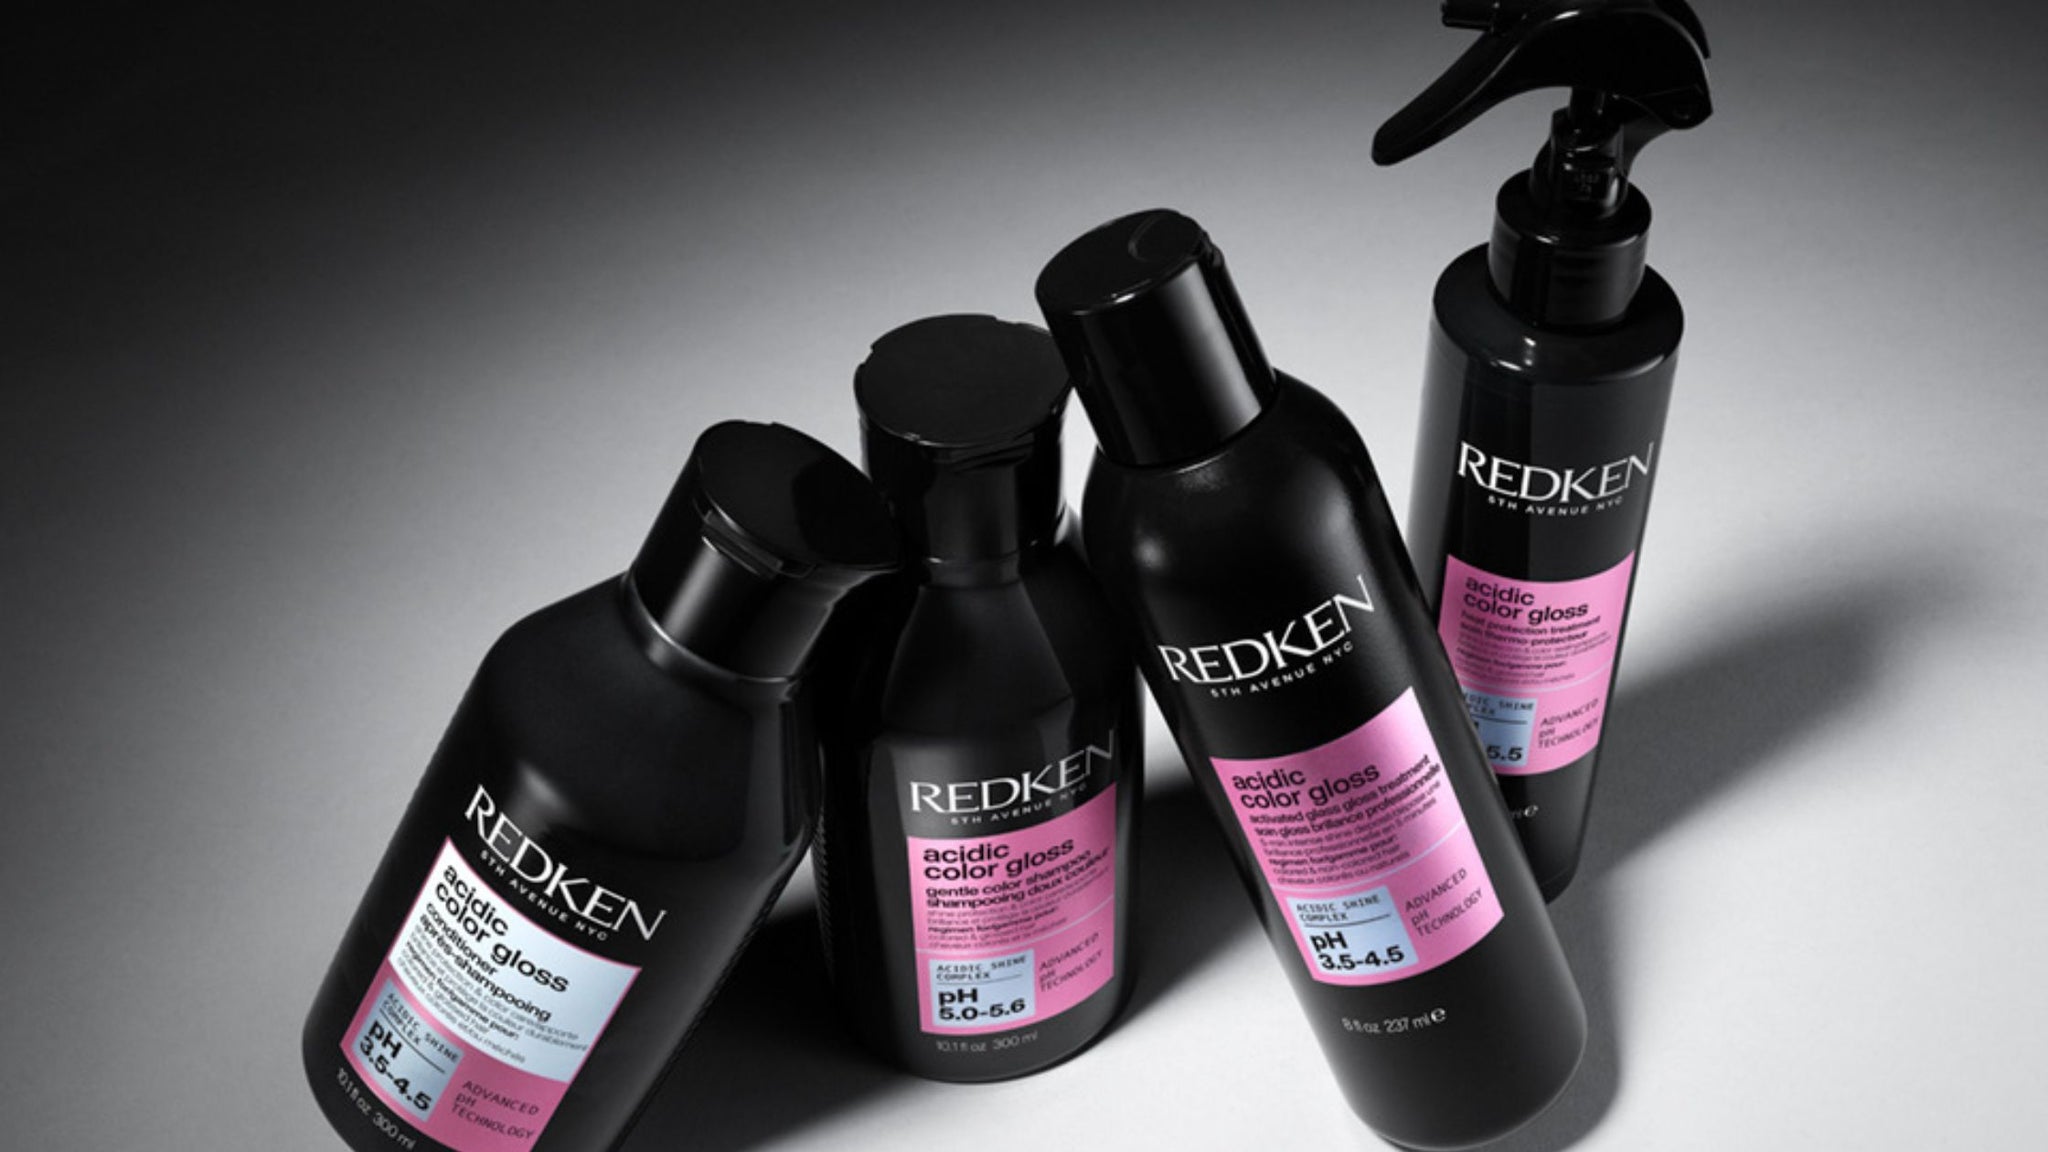 Introducing the Brand New Redken Acidic Color Gloss Range